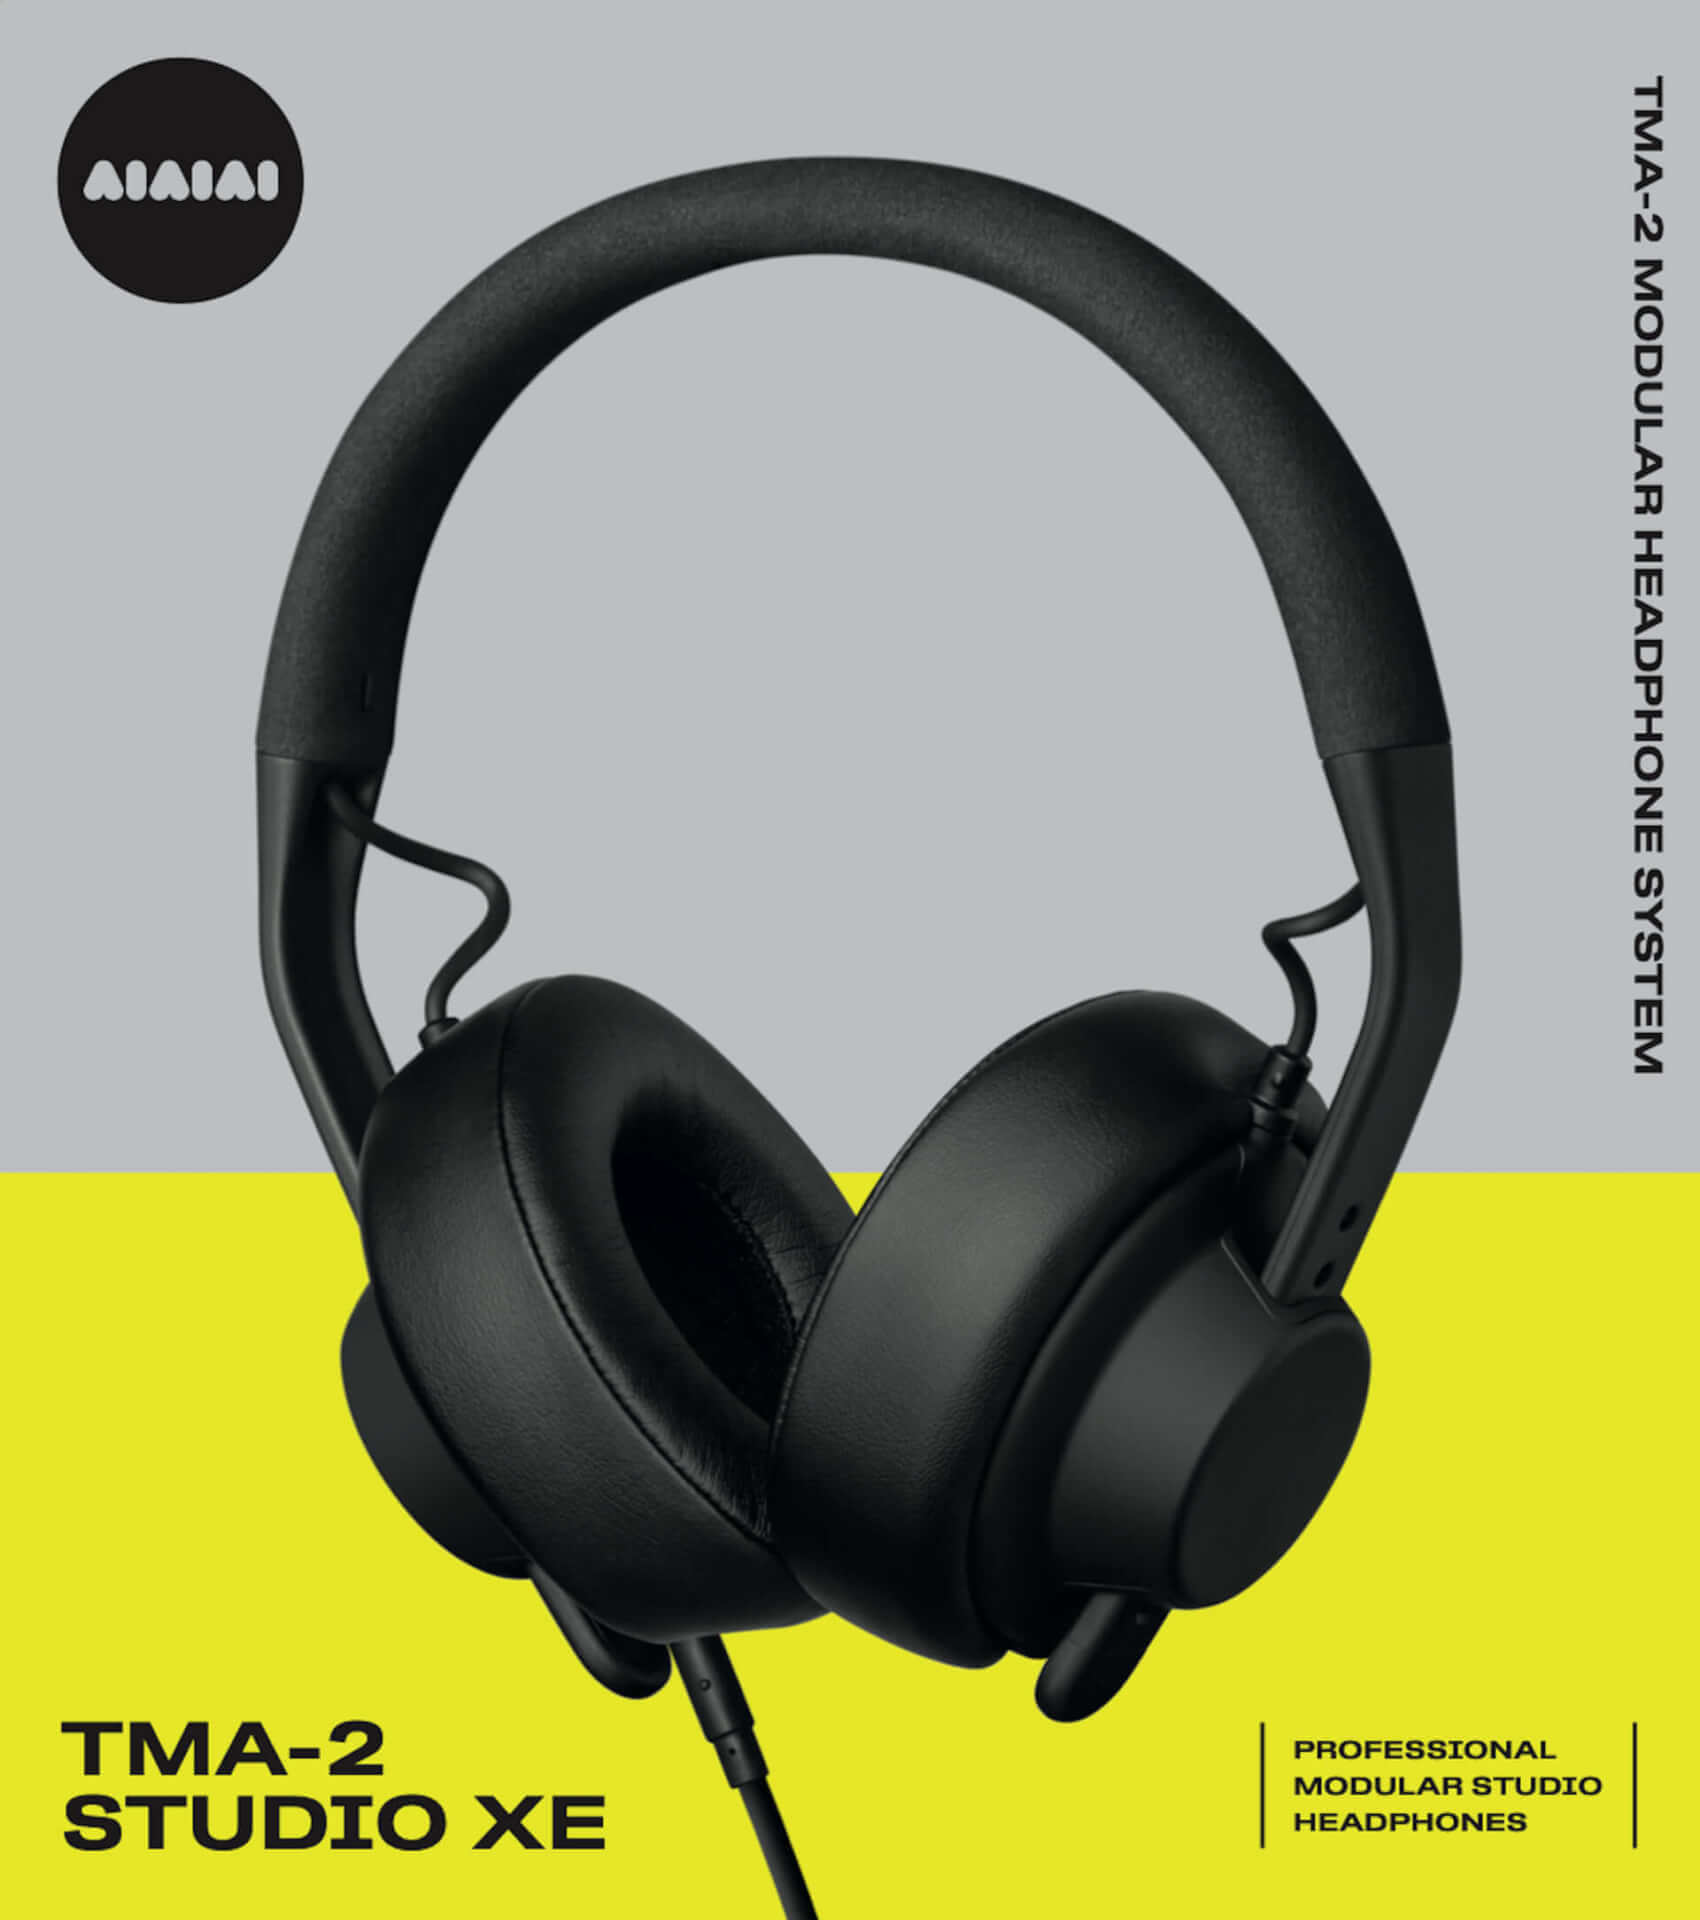 AIAIAIの魅力に迫る！新作スタジオ向けヘッドフォン『TMA-2 Studio』と『TMA-2 Studio XE』を解剖 music210903_aiaiai-015